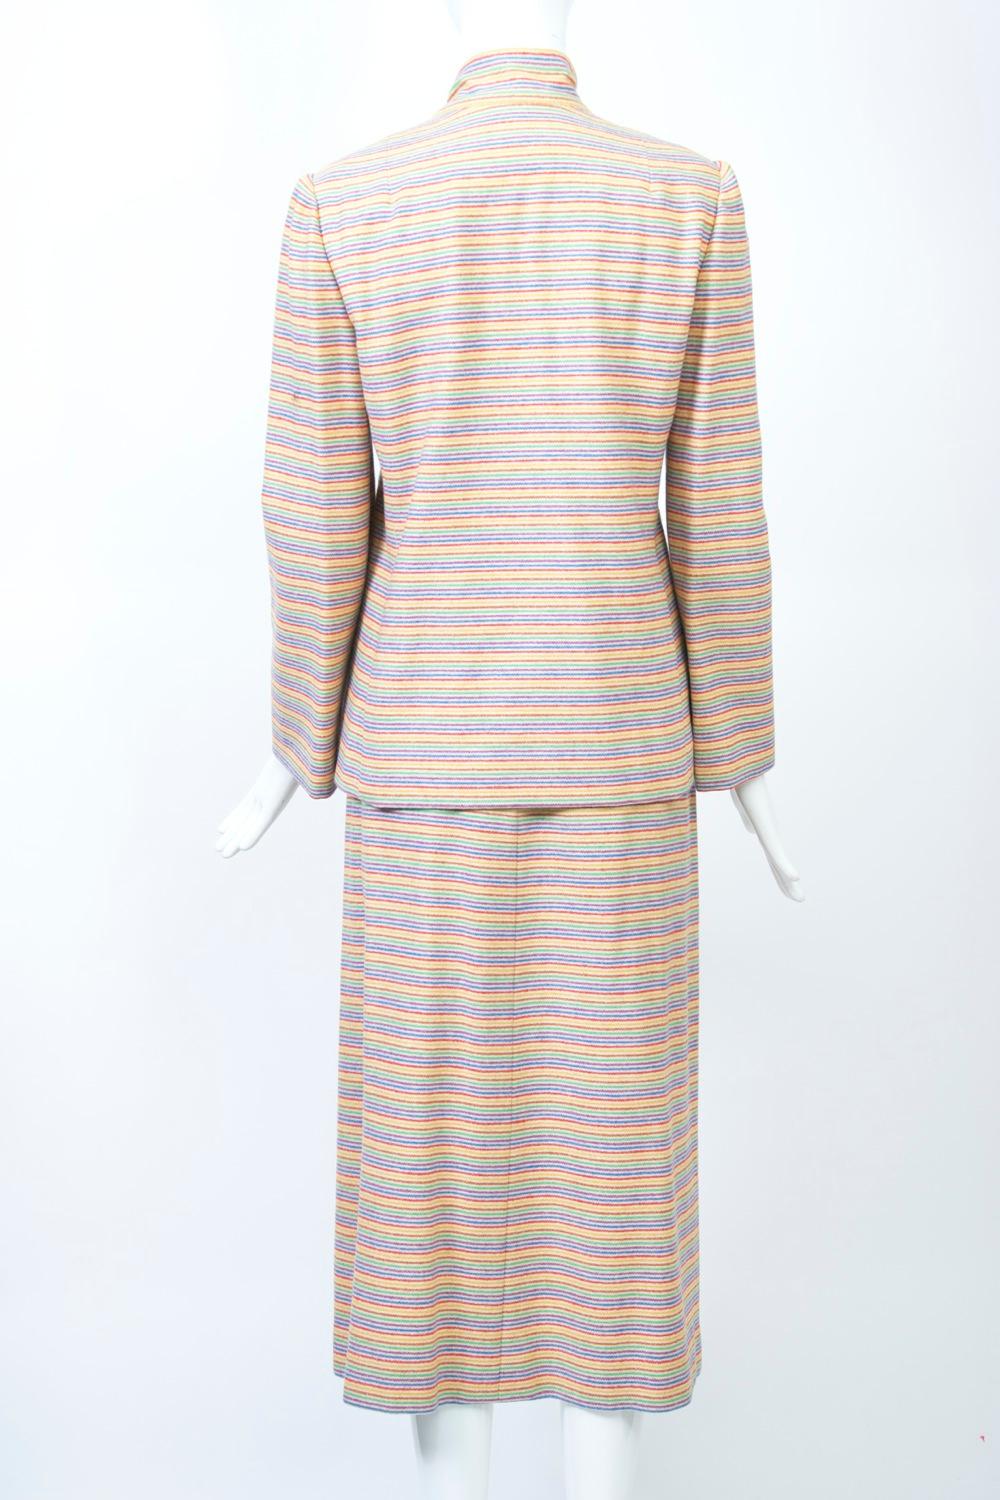 Pauline Trigère Striped Wool Suit 2